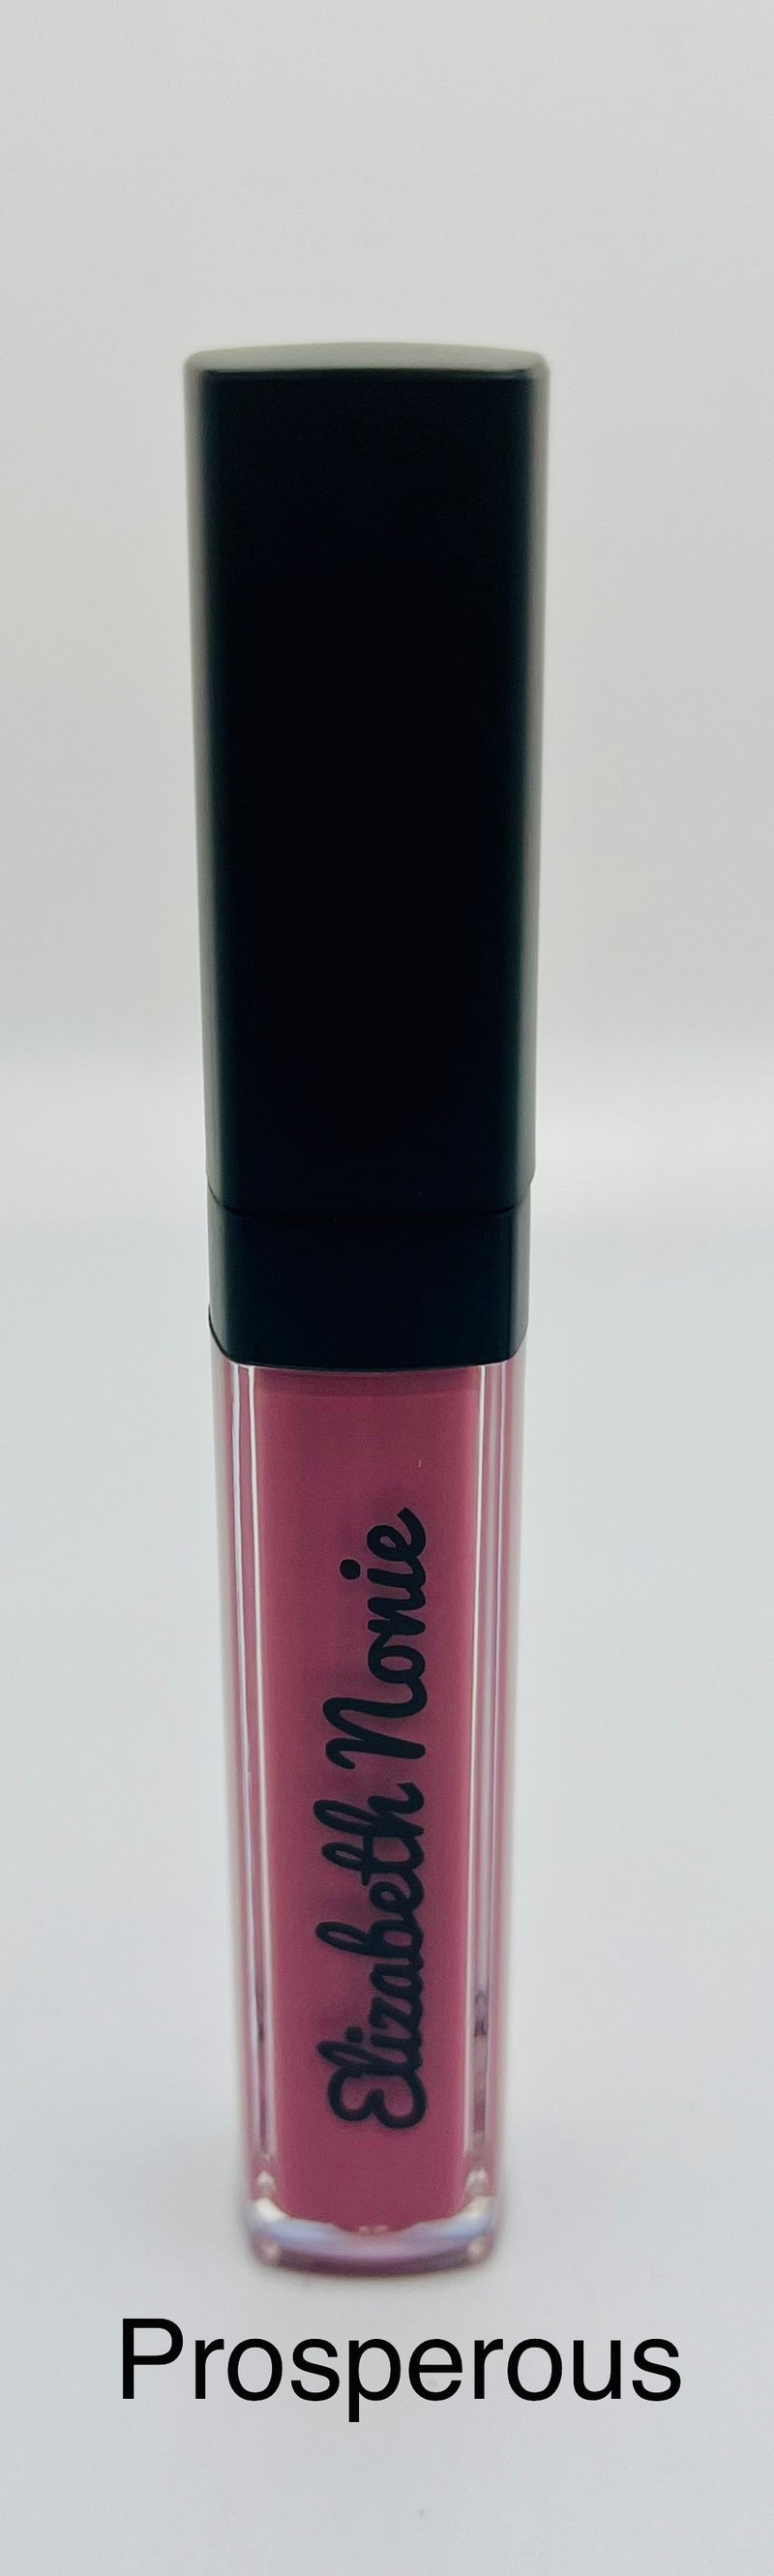 Prosperous Matte Liquid Lipstick